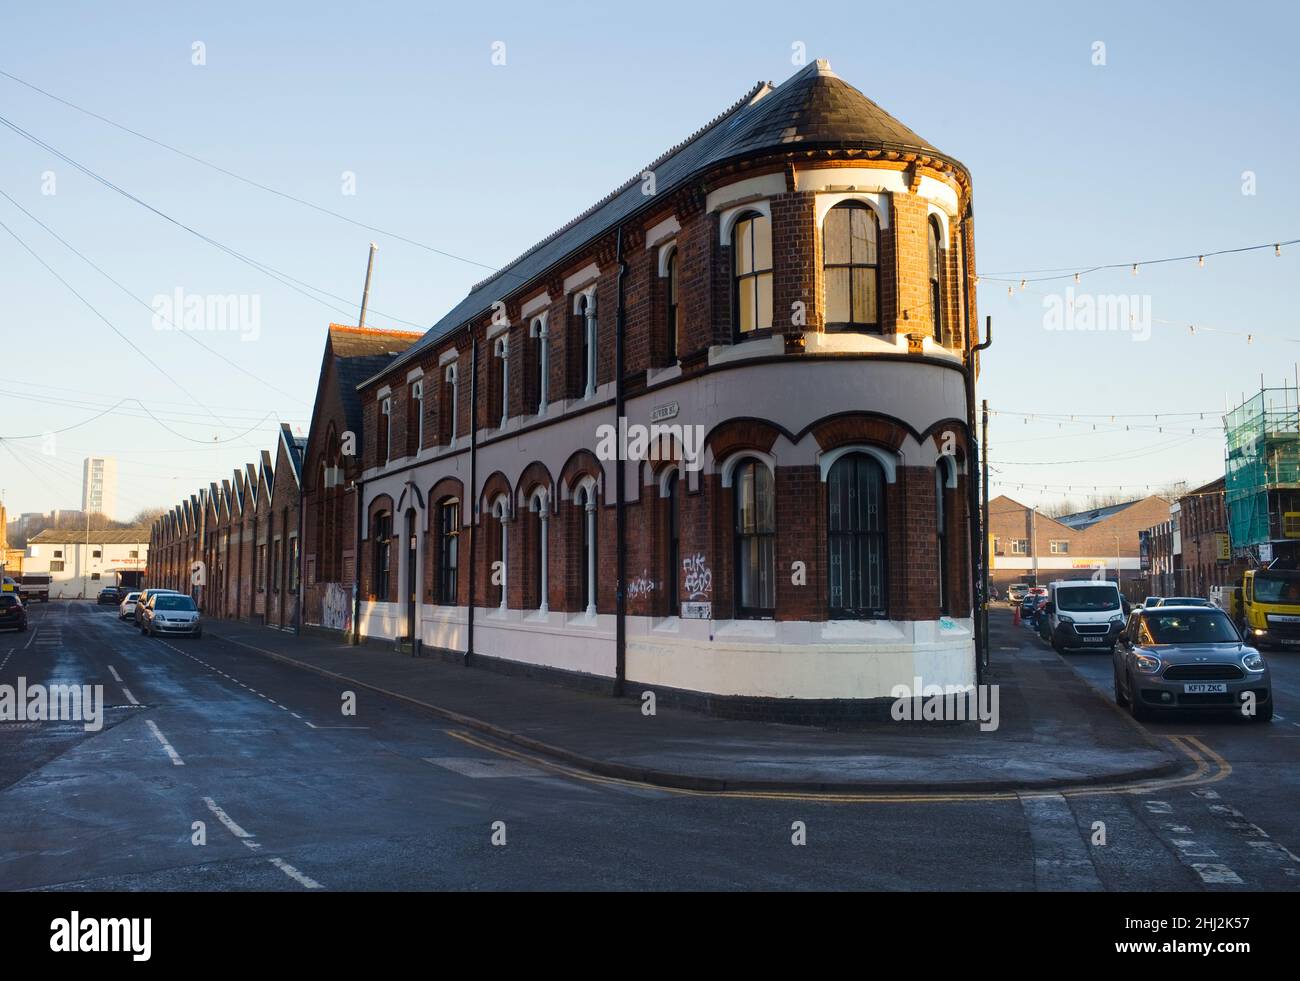 Wedge shaped building in River Street, Digbeth, Birmingham Stock Photo